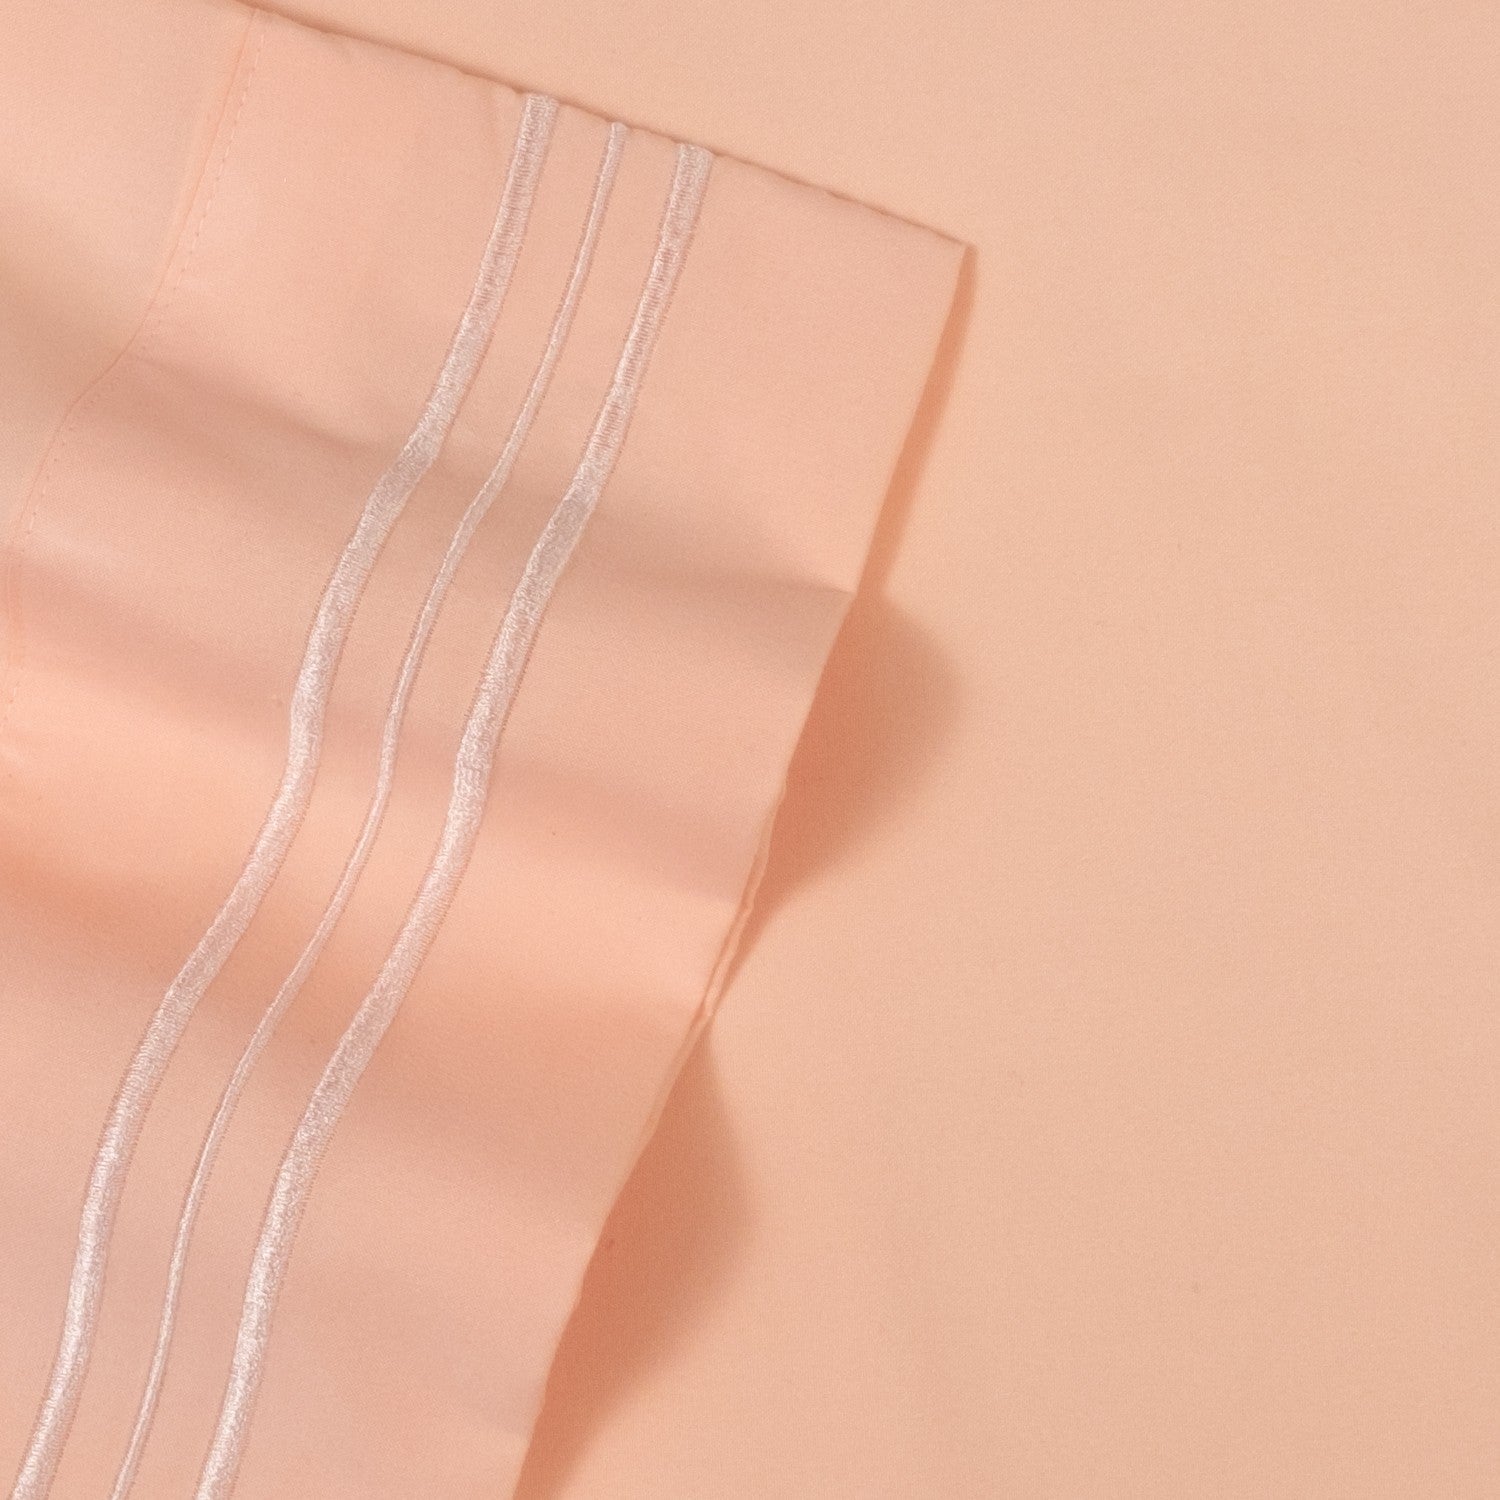 Classic 4-Piece Bed Sheet Set (Peach) - Fabric